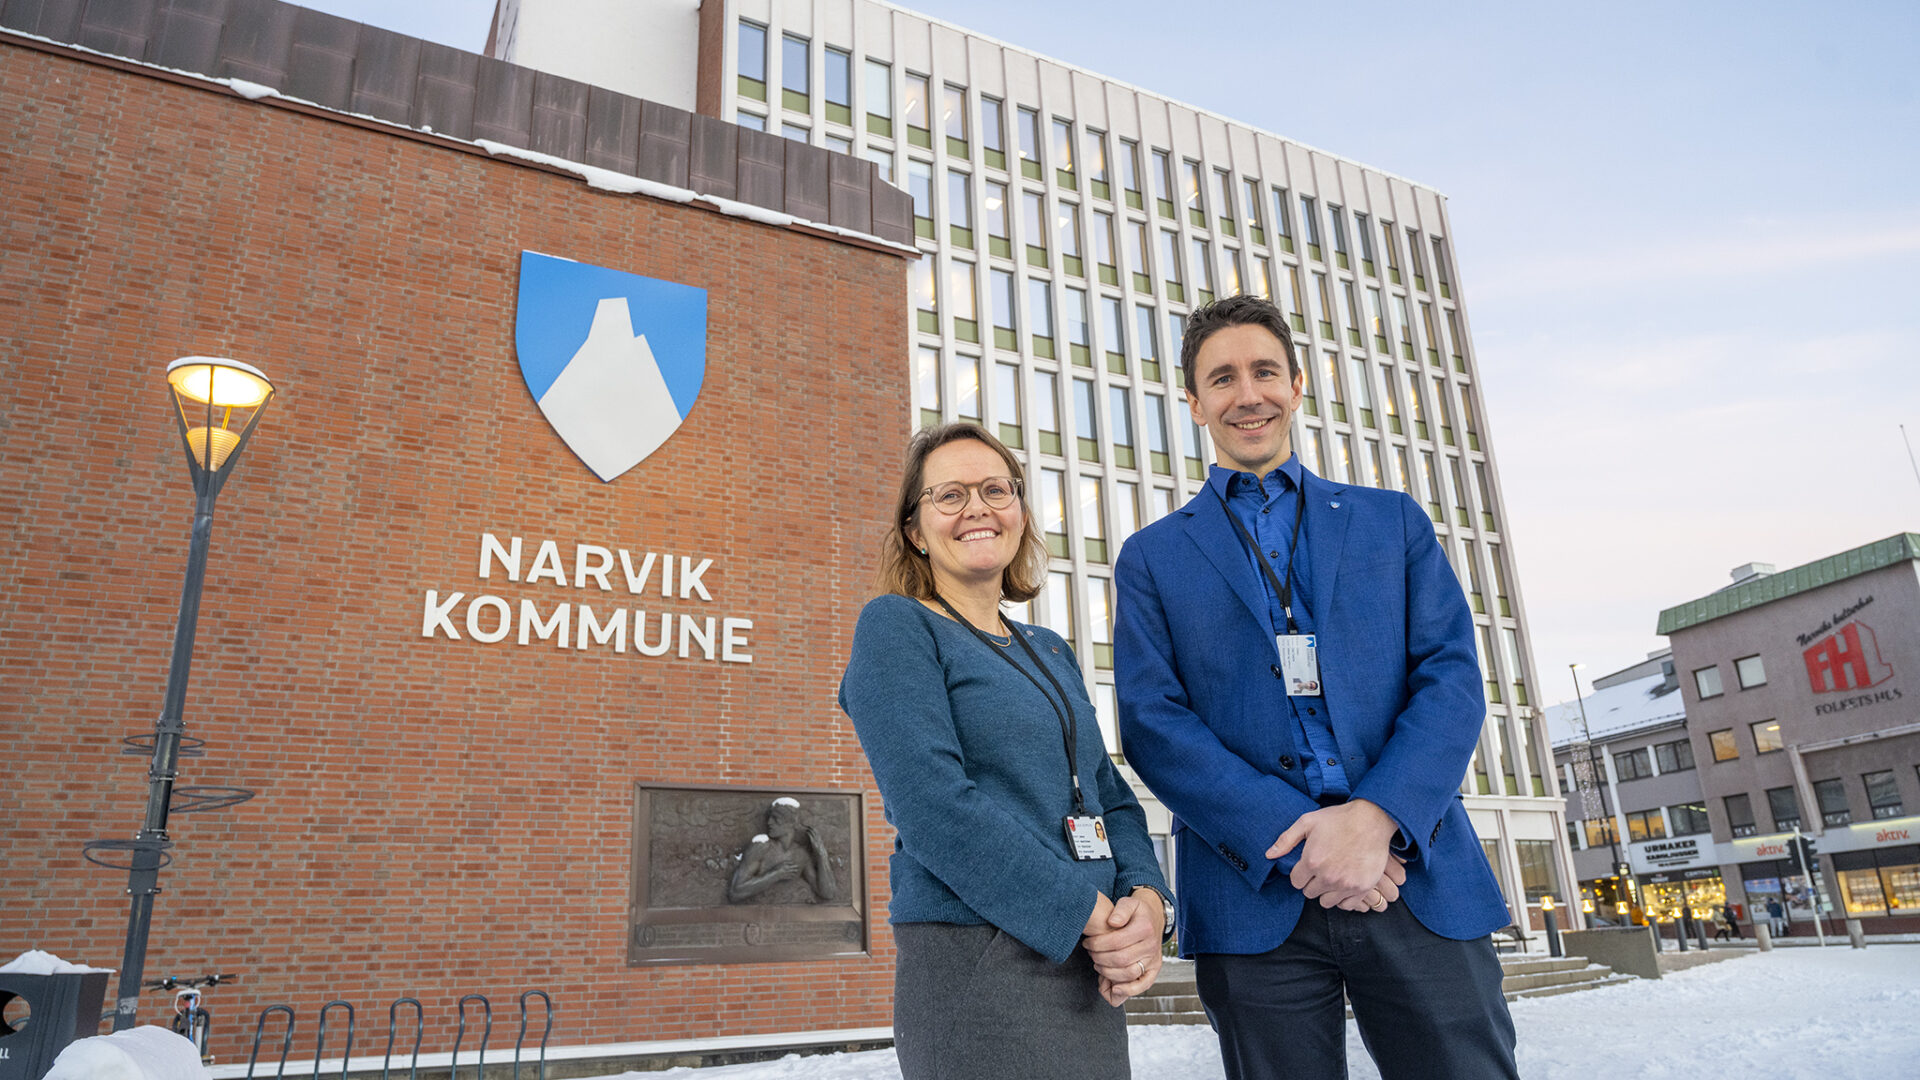 Narvik Kommune helse